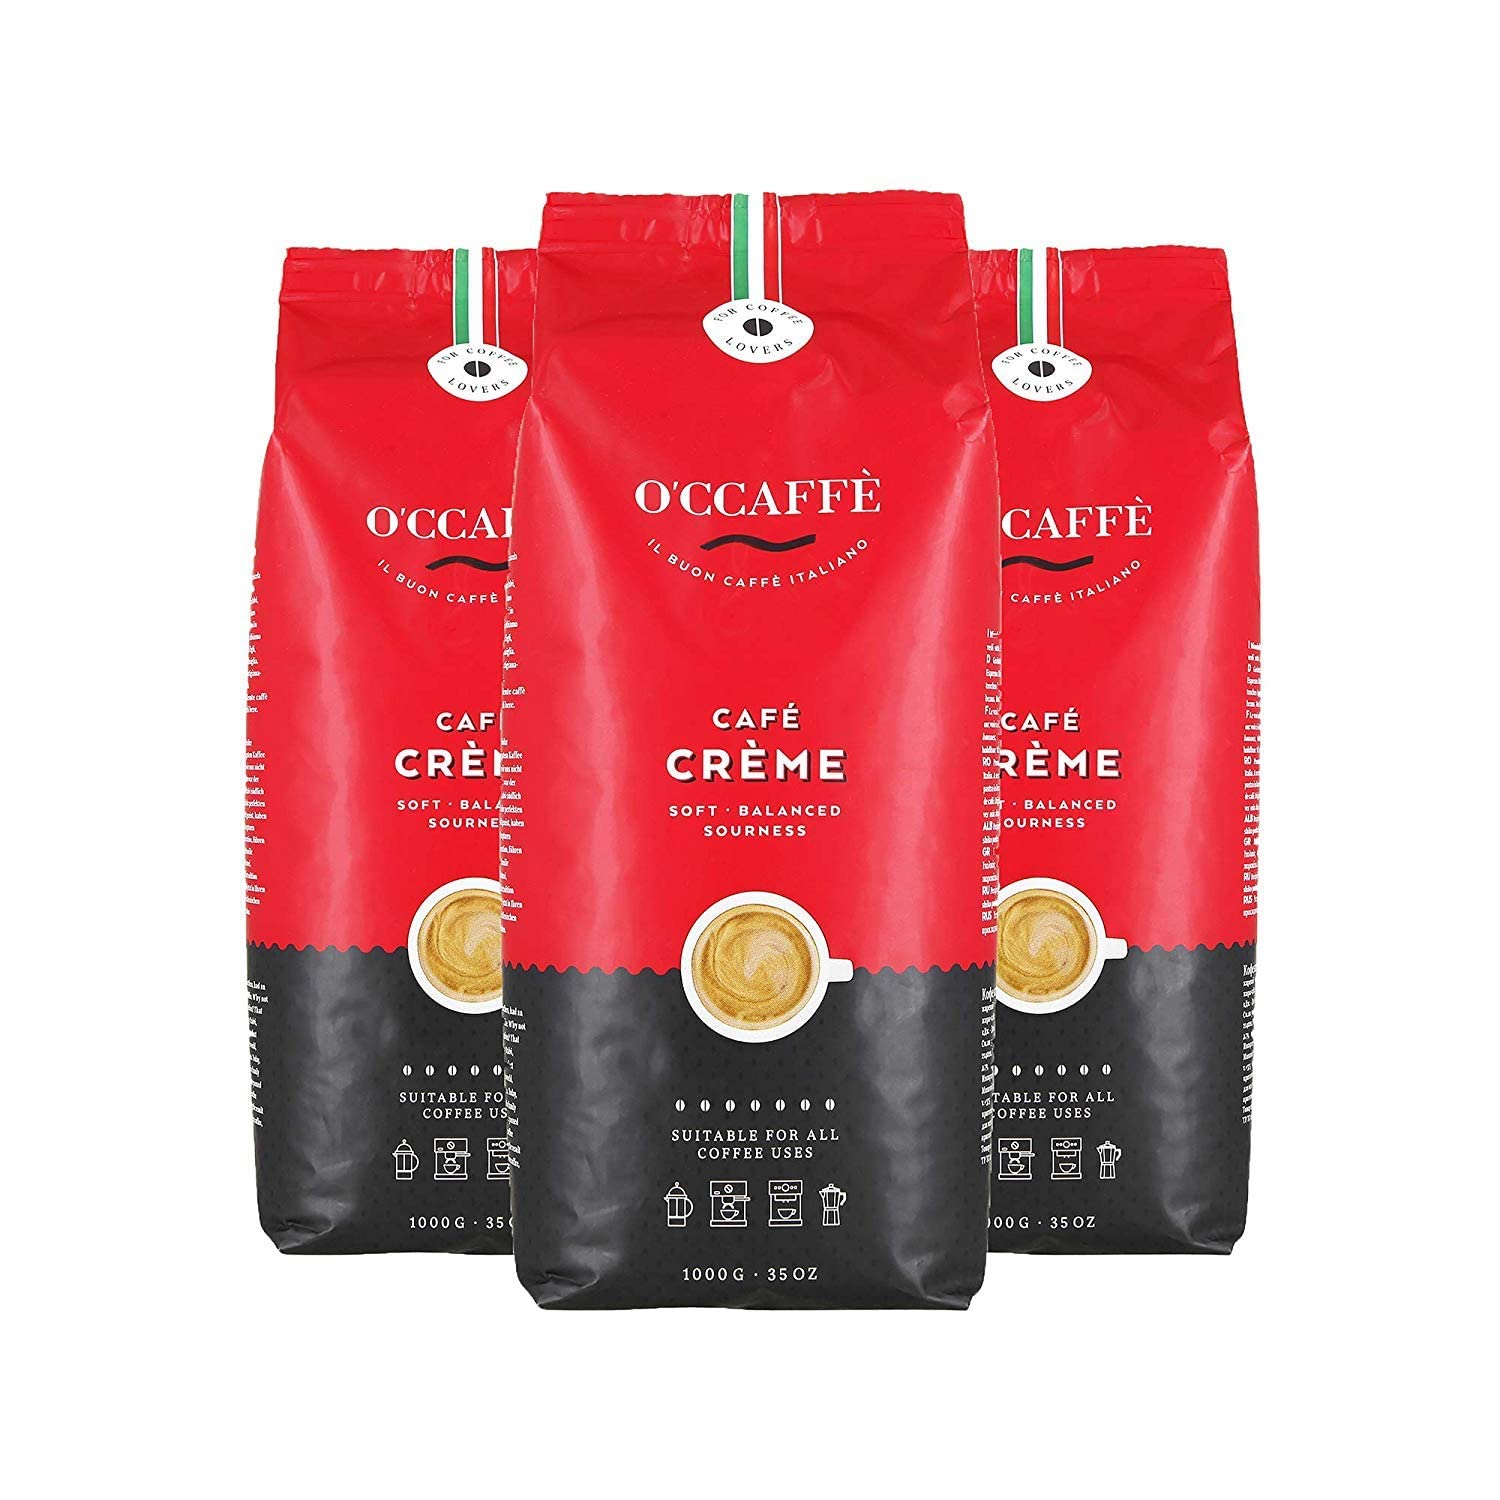 O\'CCAFFÈ Café Crème 3 x 1 kg Whole Coffee Beans Low Acid Aromatic Coffee Crema Extra Slow Drum Roasting from Italian Family Business